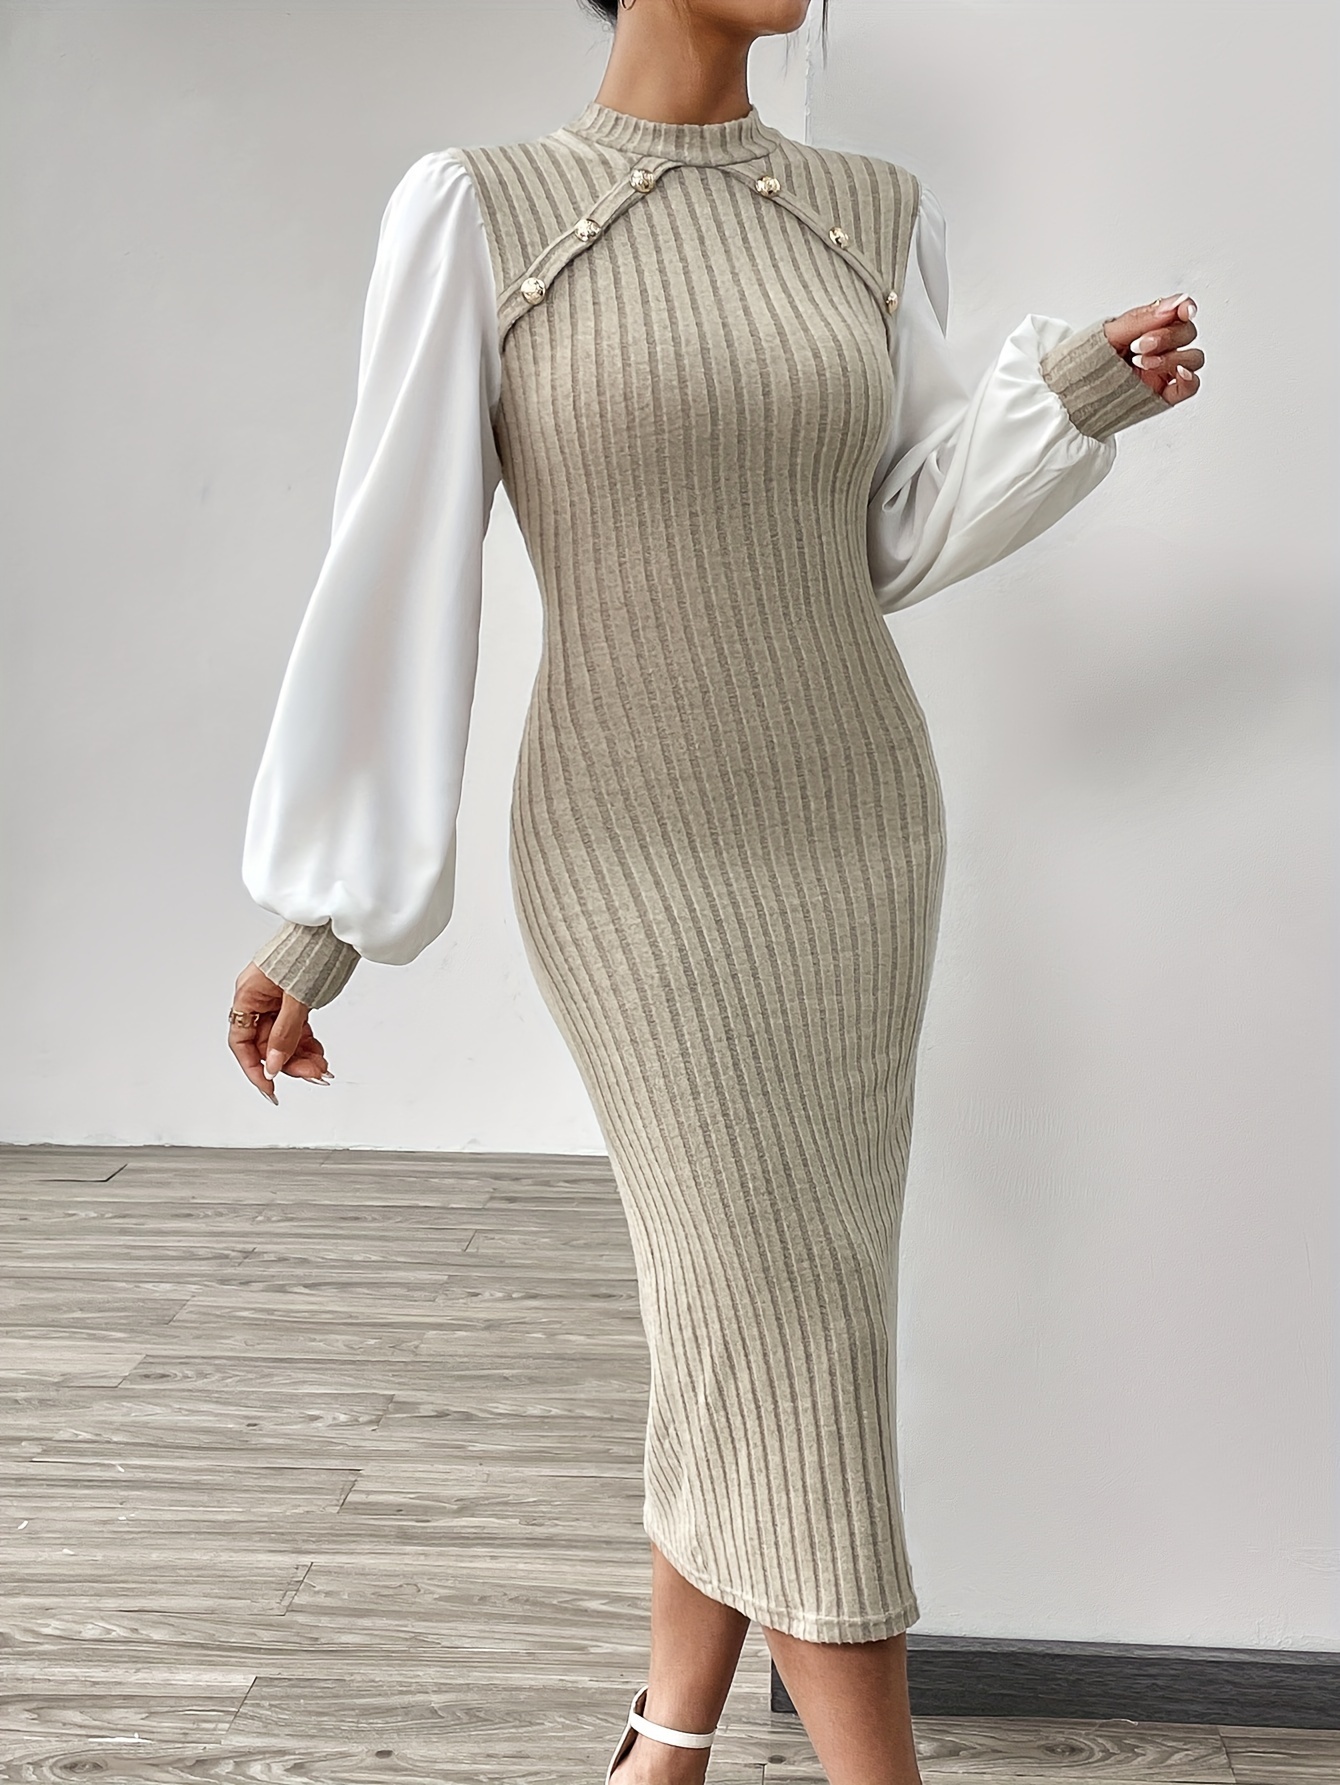 ribbed knit button decor sheath dress elegant mock neck lantern sleeve midi length dress womens clothing